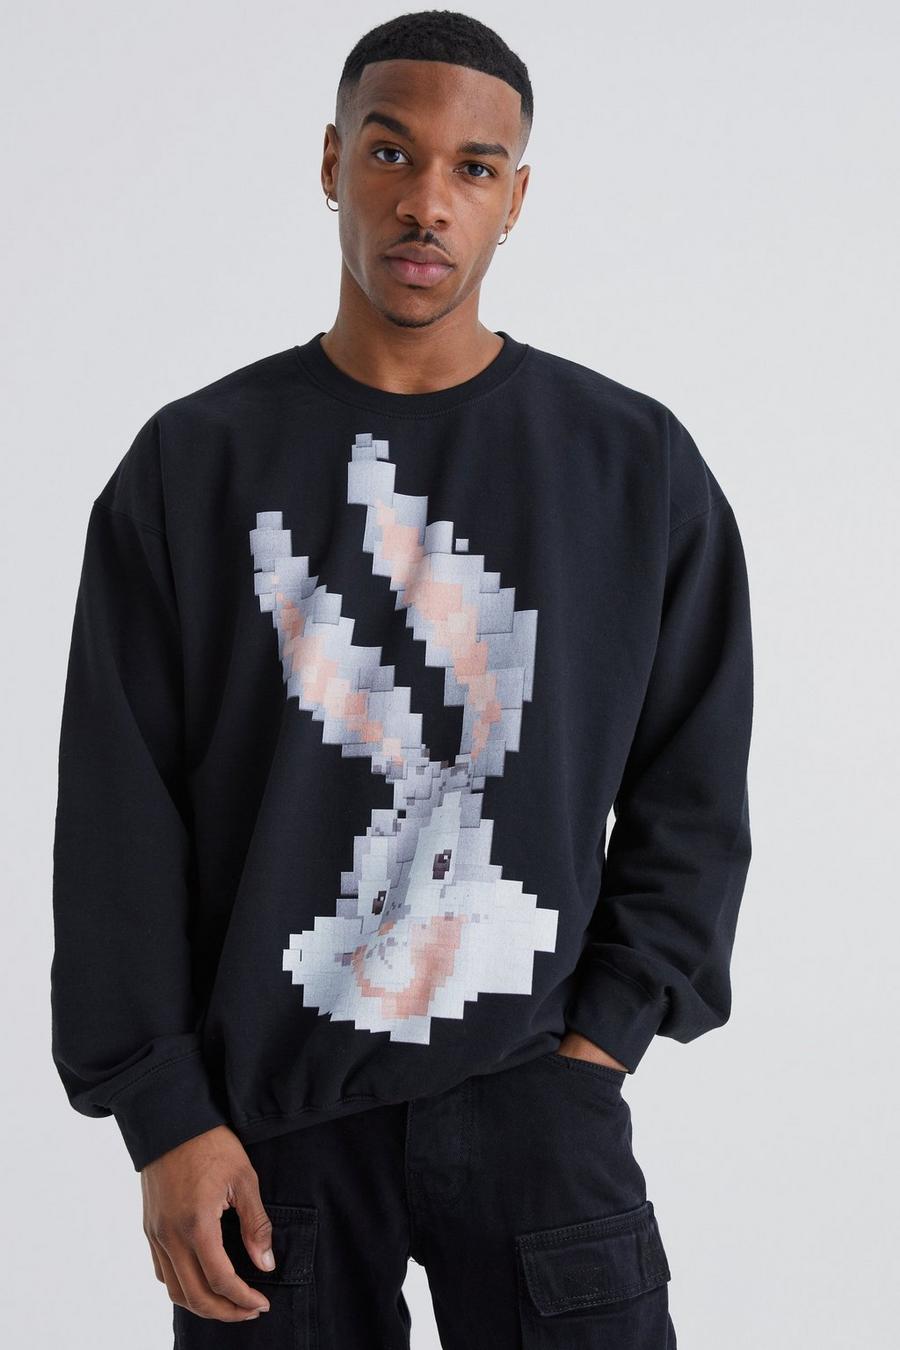 Black svart Oversized Pixel Bugs Bunny License Sweatshirt